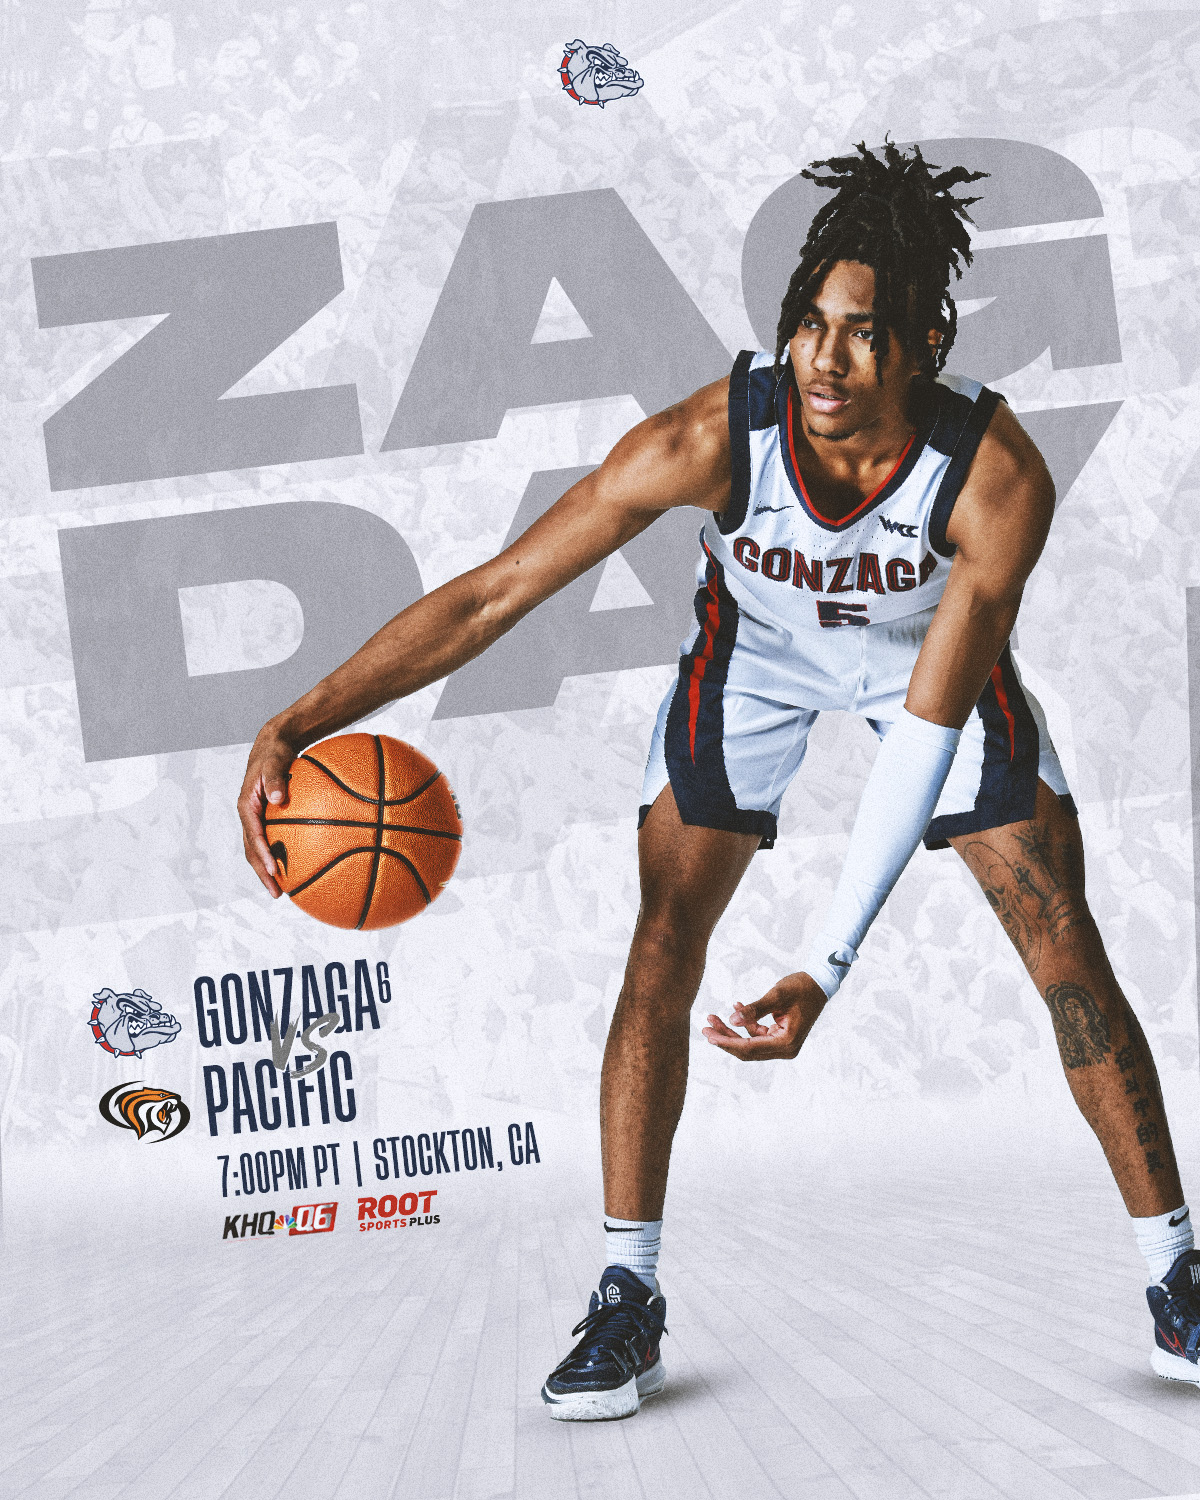 Gonzaga Basketball on Twitter